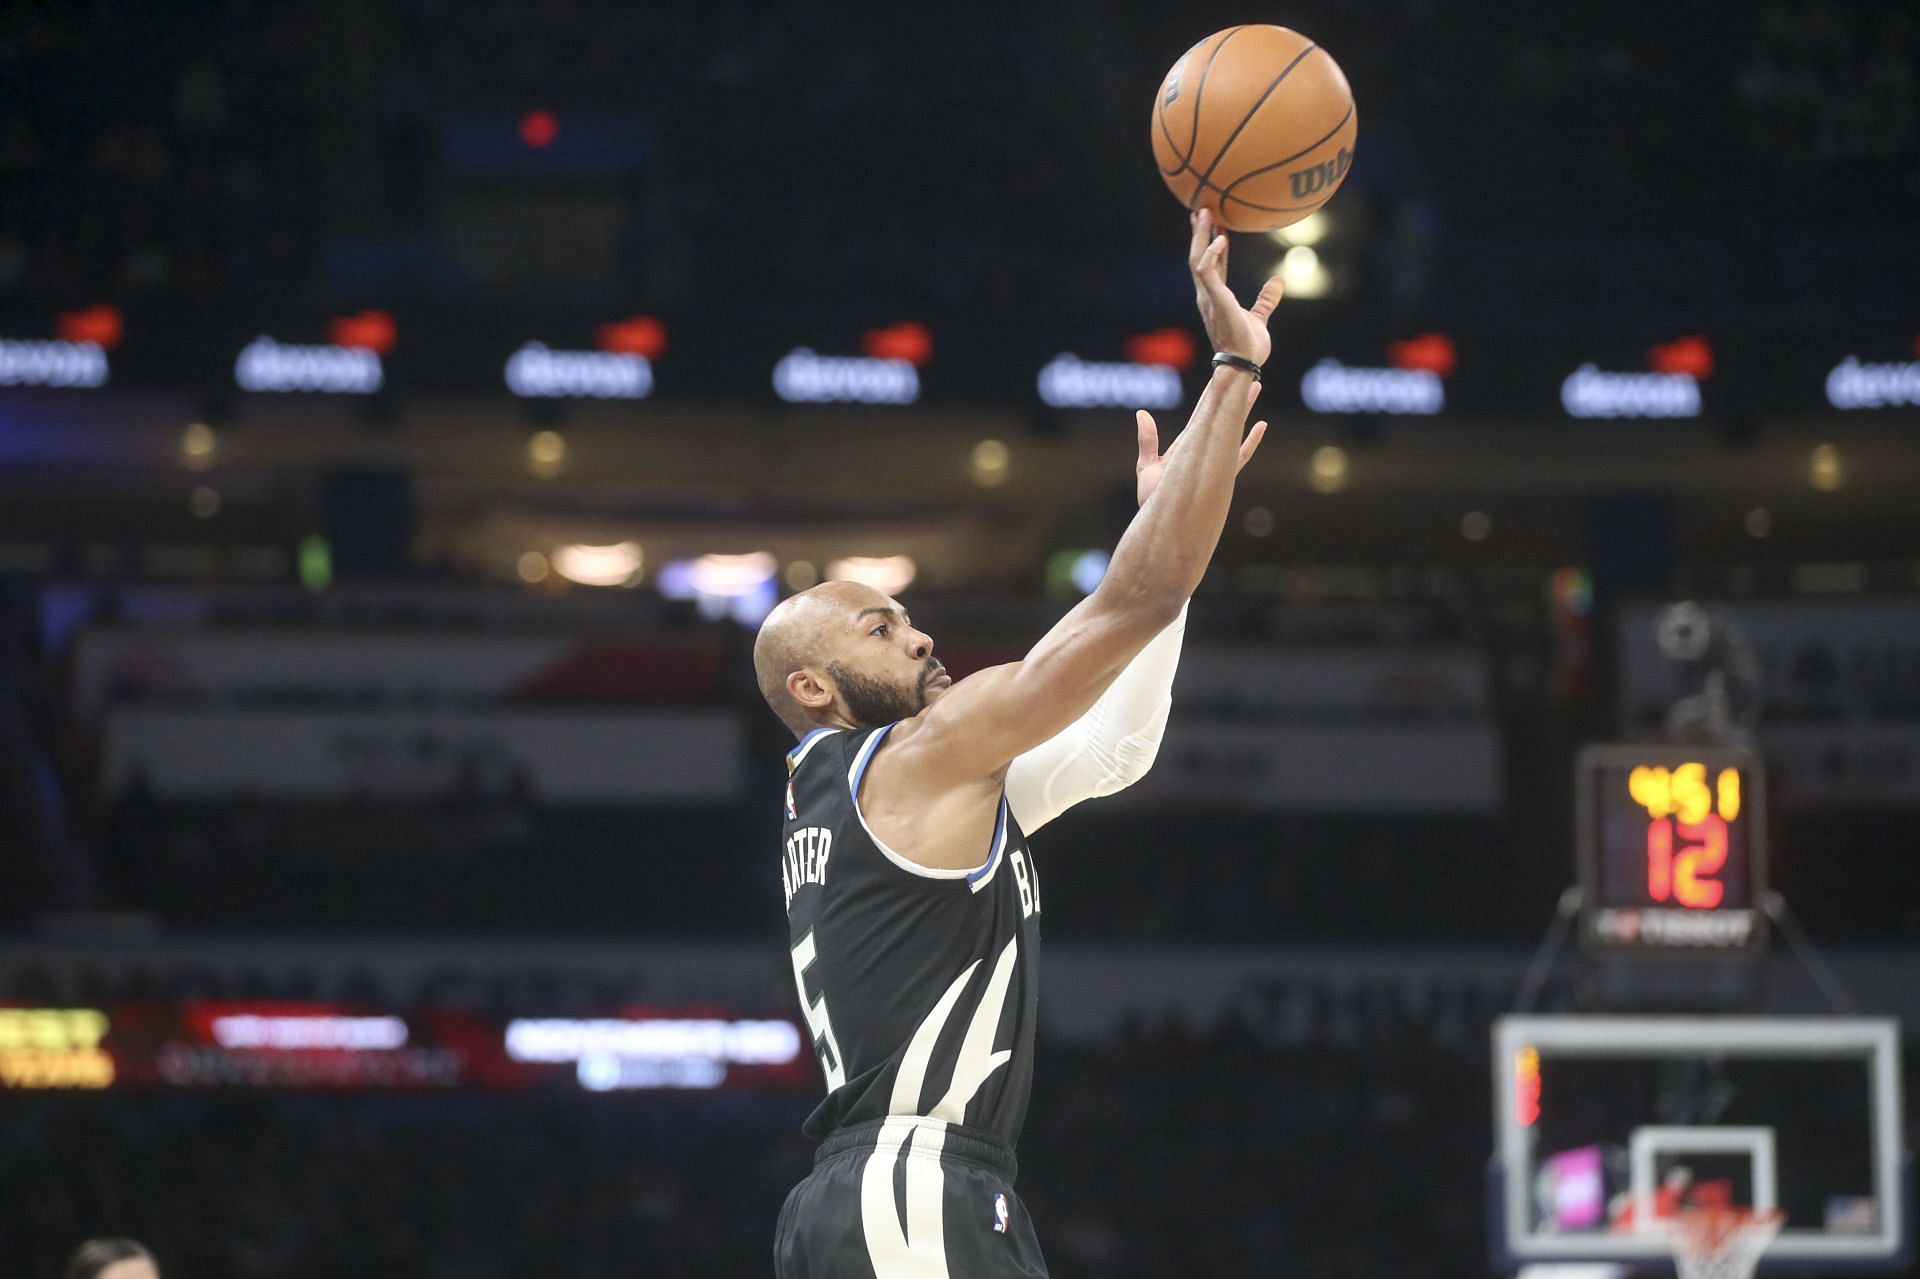 Bucks vs. Spurs: Odds, spread, over/under - March 22